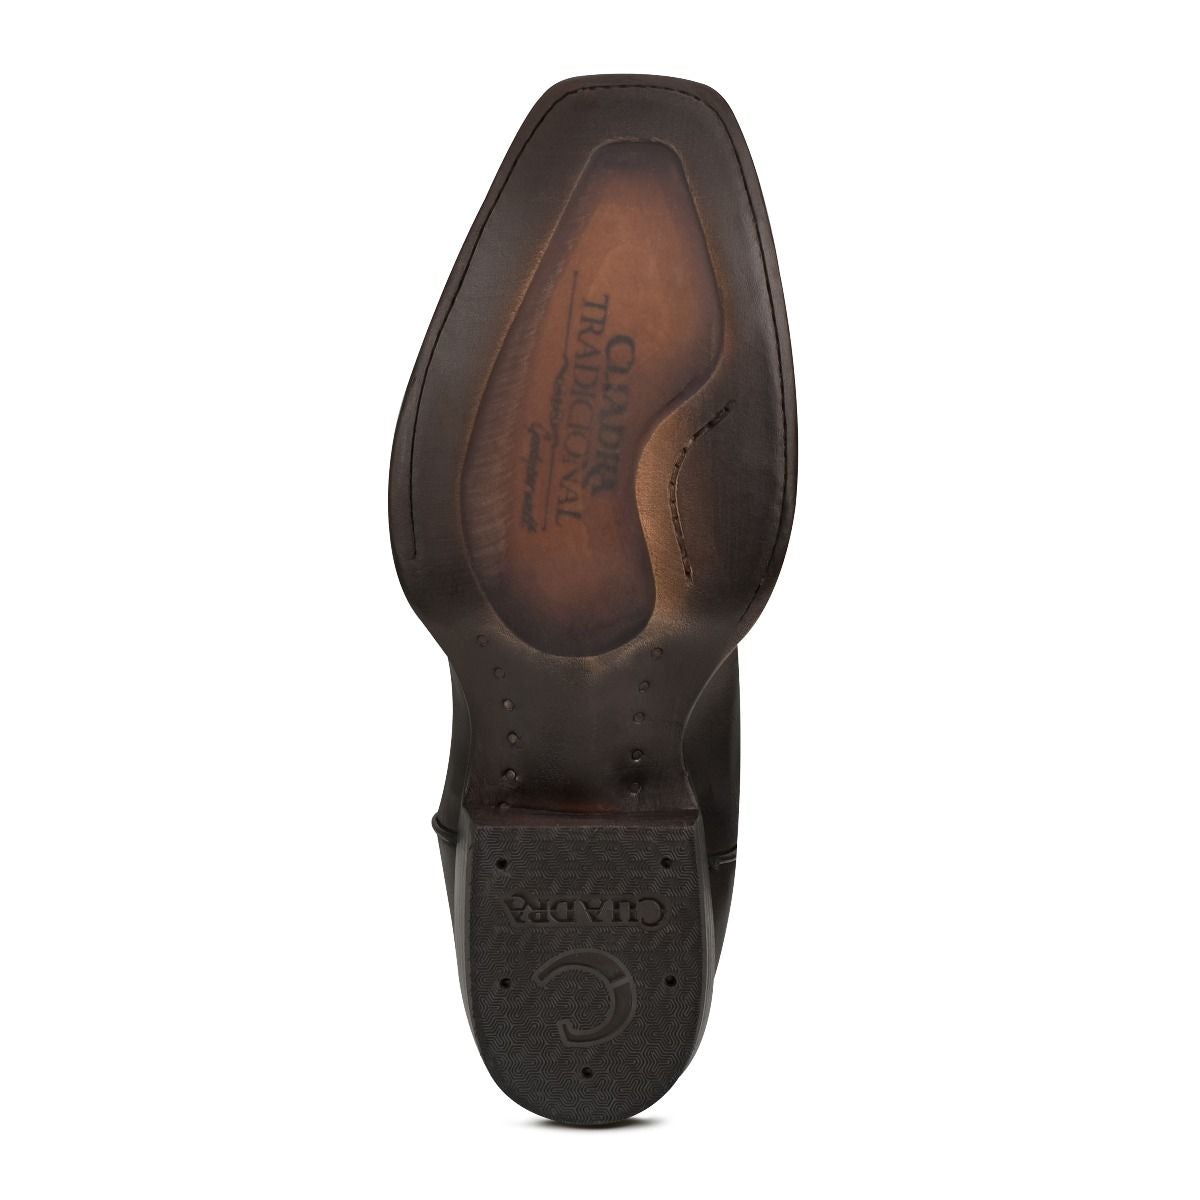 1J1NRS - Cuadra black casual fashion cowhide cowboy leather boots for men-Kuet.us